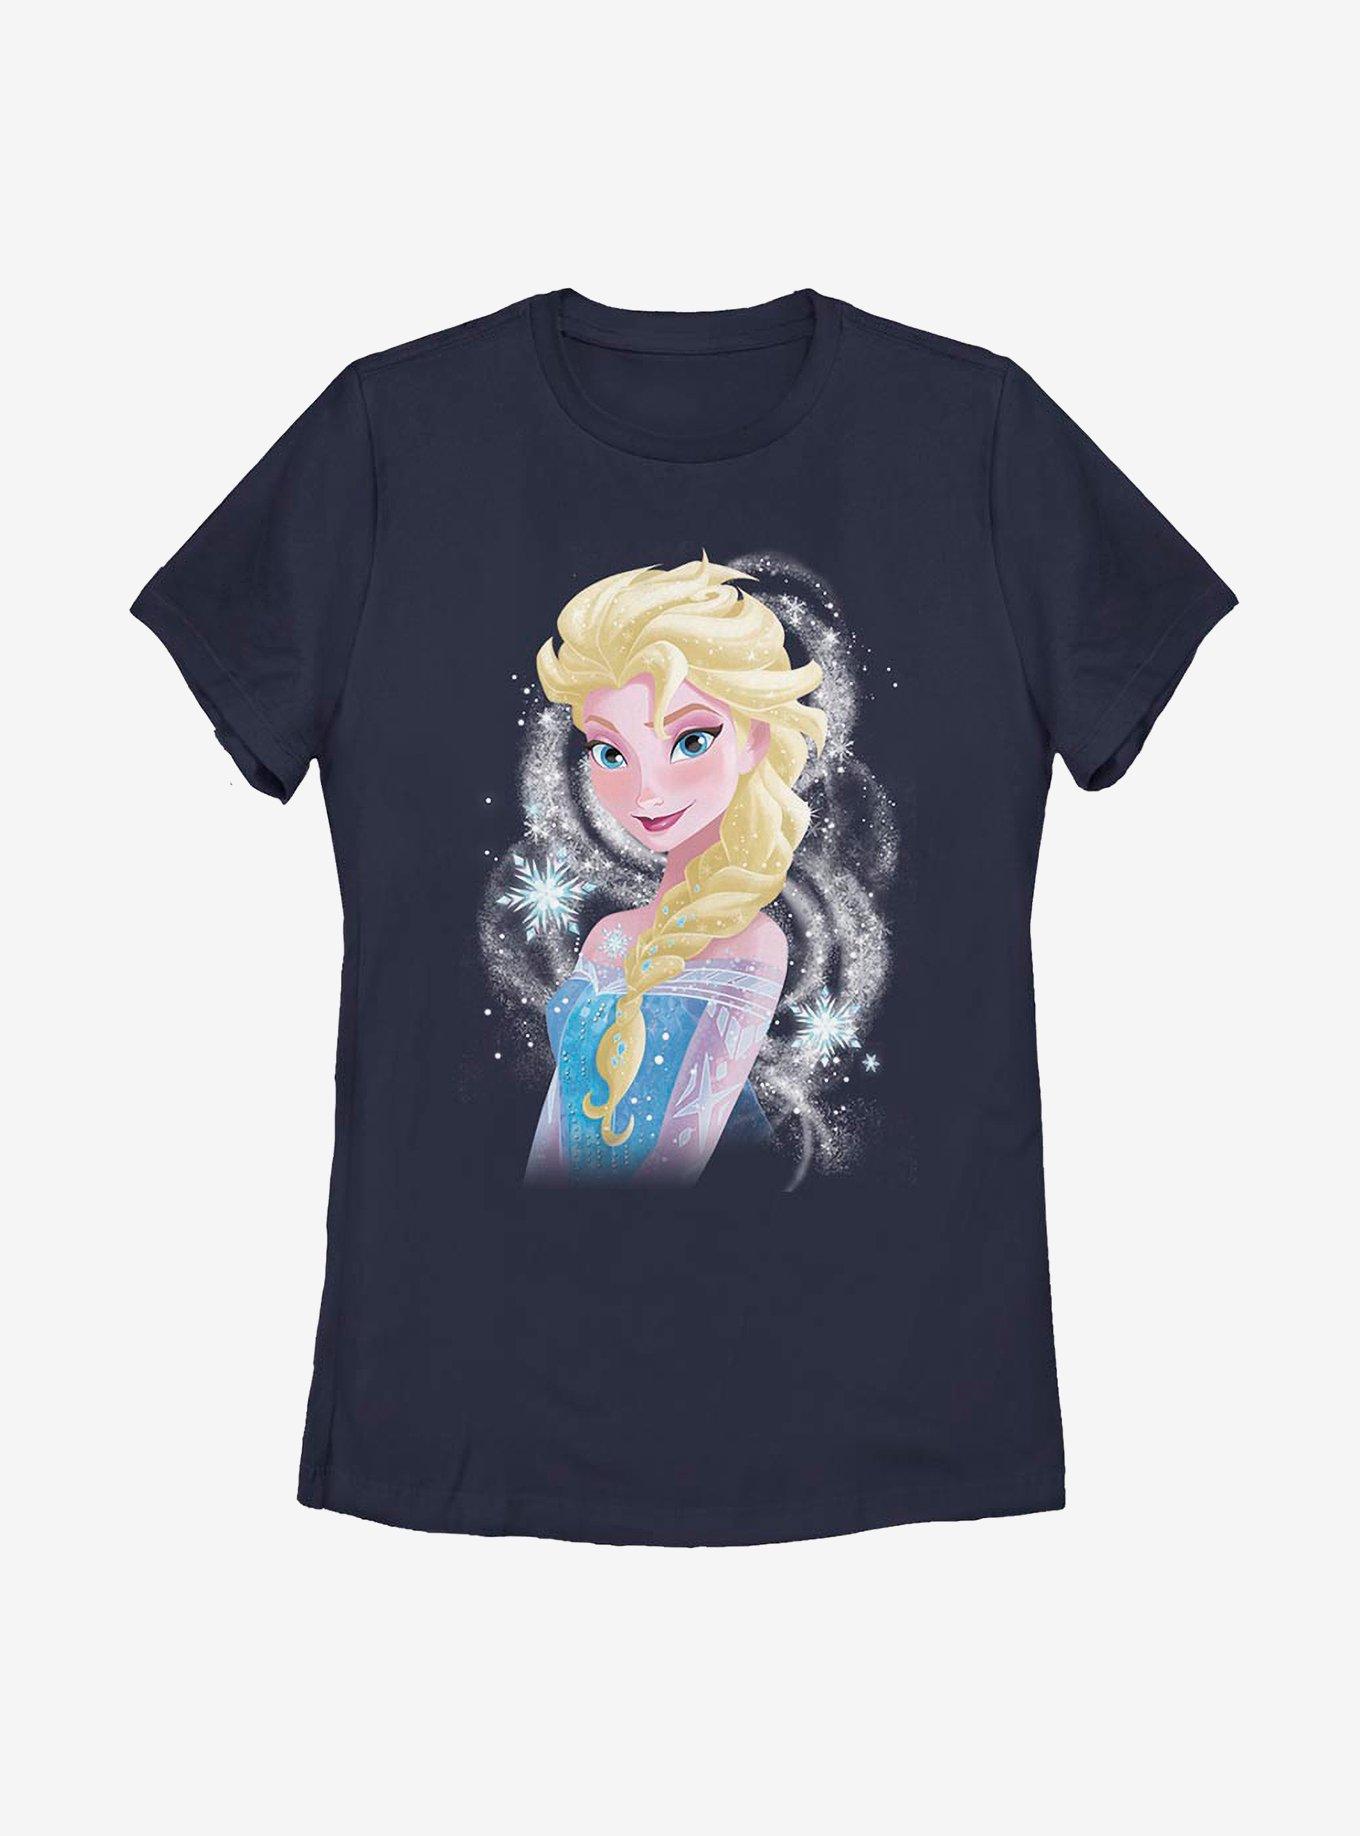 Frozen - T-shirt set with briefs 29316RR